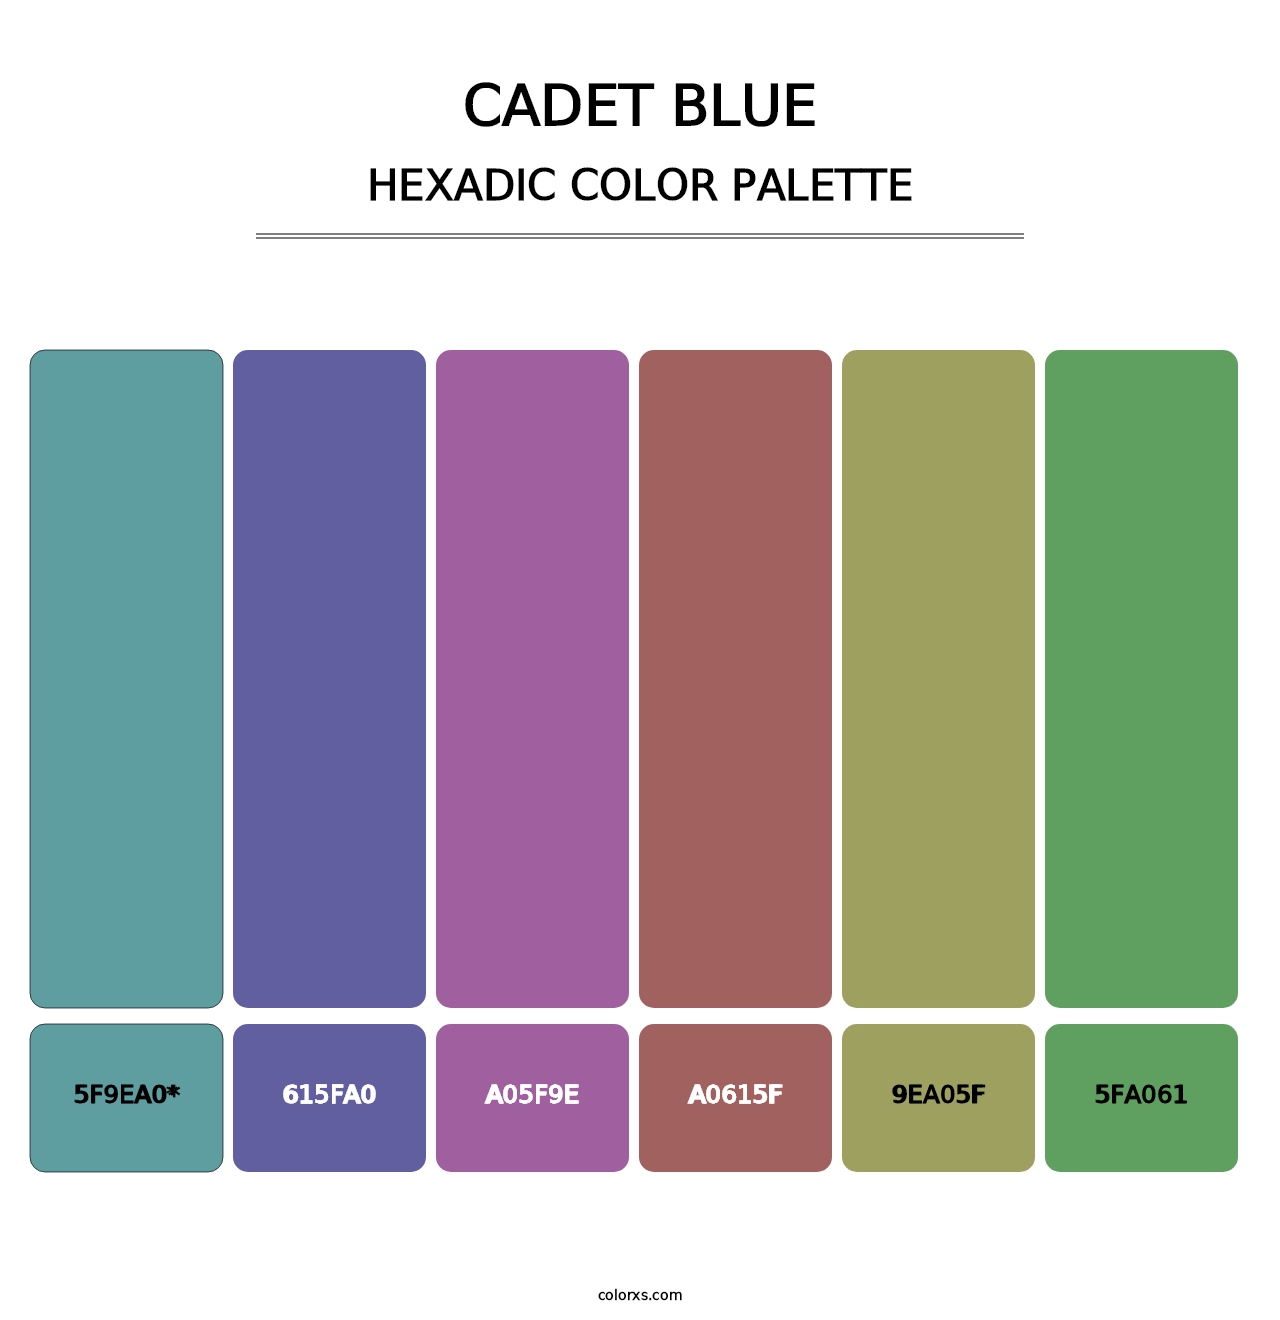 Cadet Blue - Hexadic Color Palette